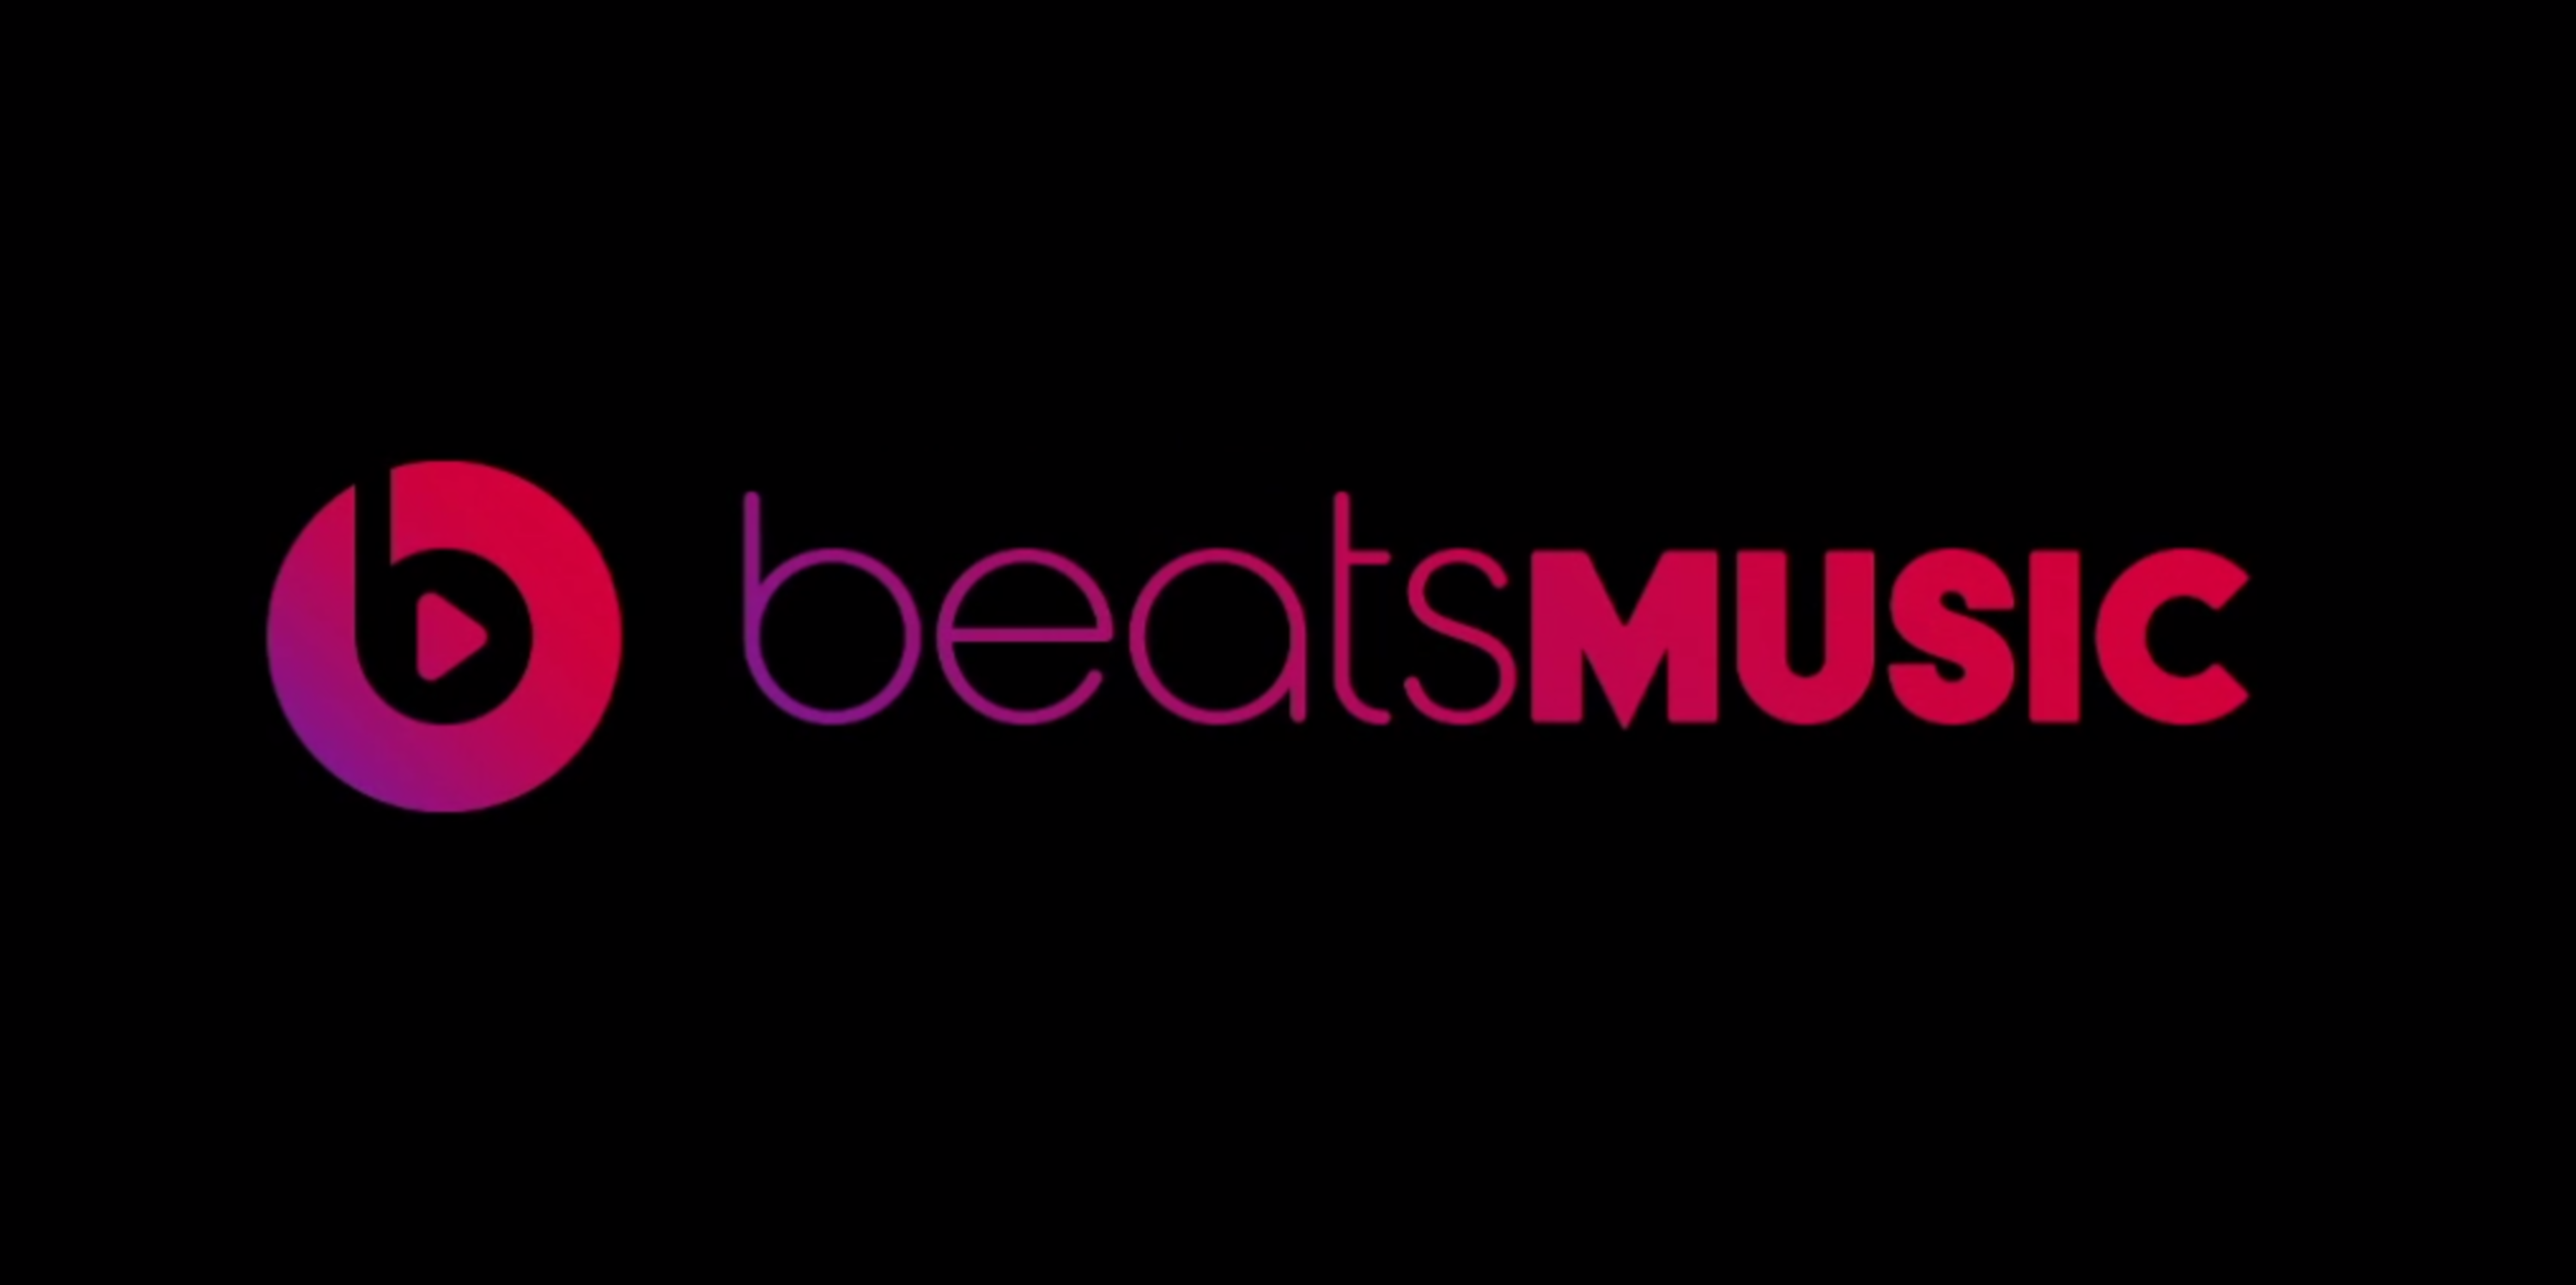 Musical beats. Music Beats. Beats Music картинки. Beats надпись для шапки.